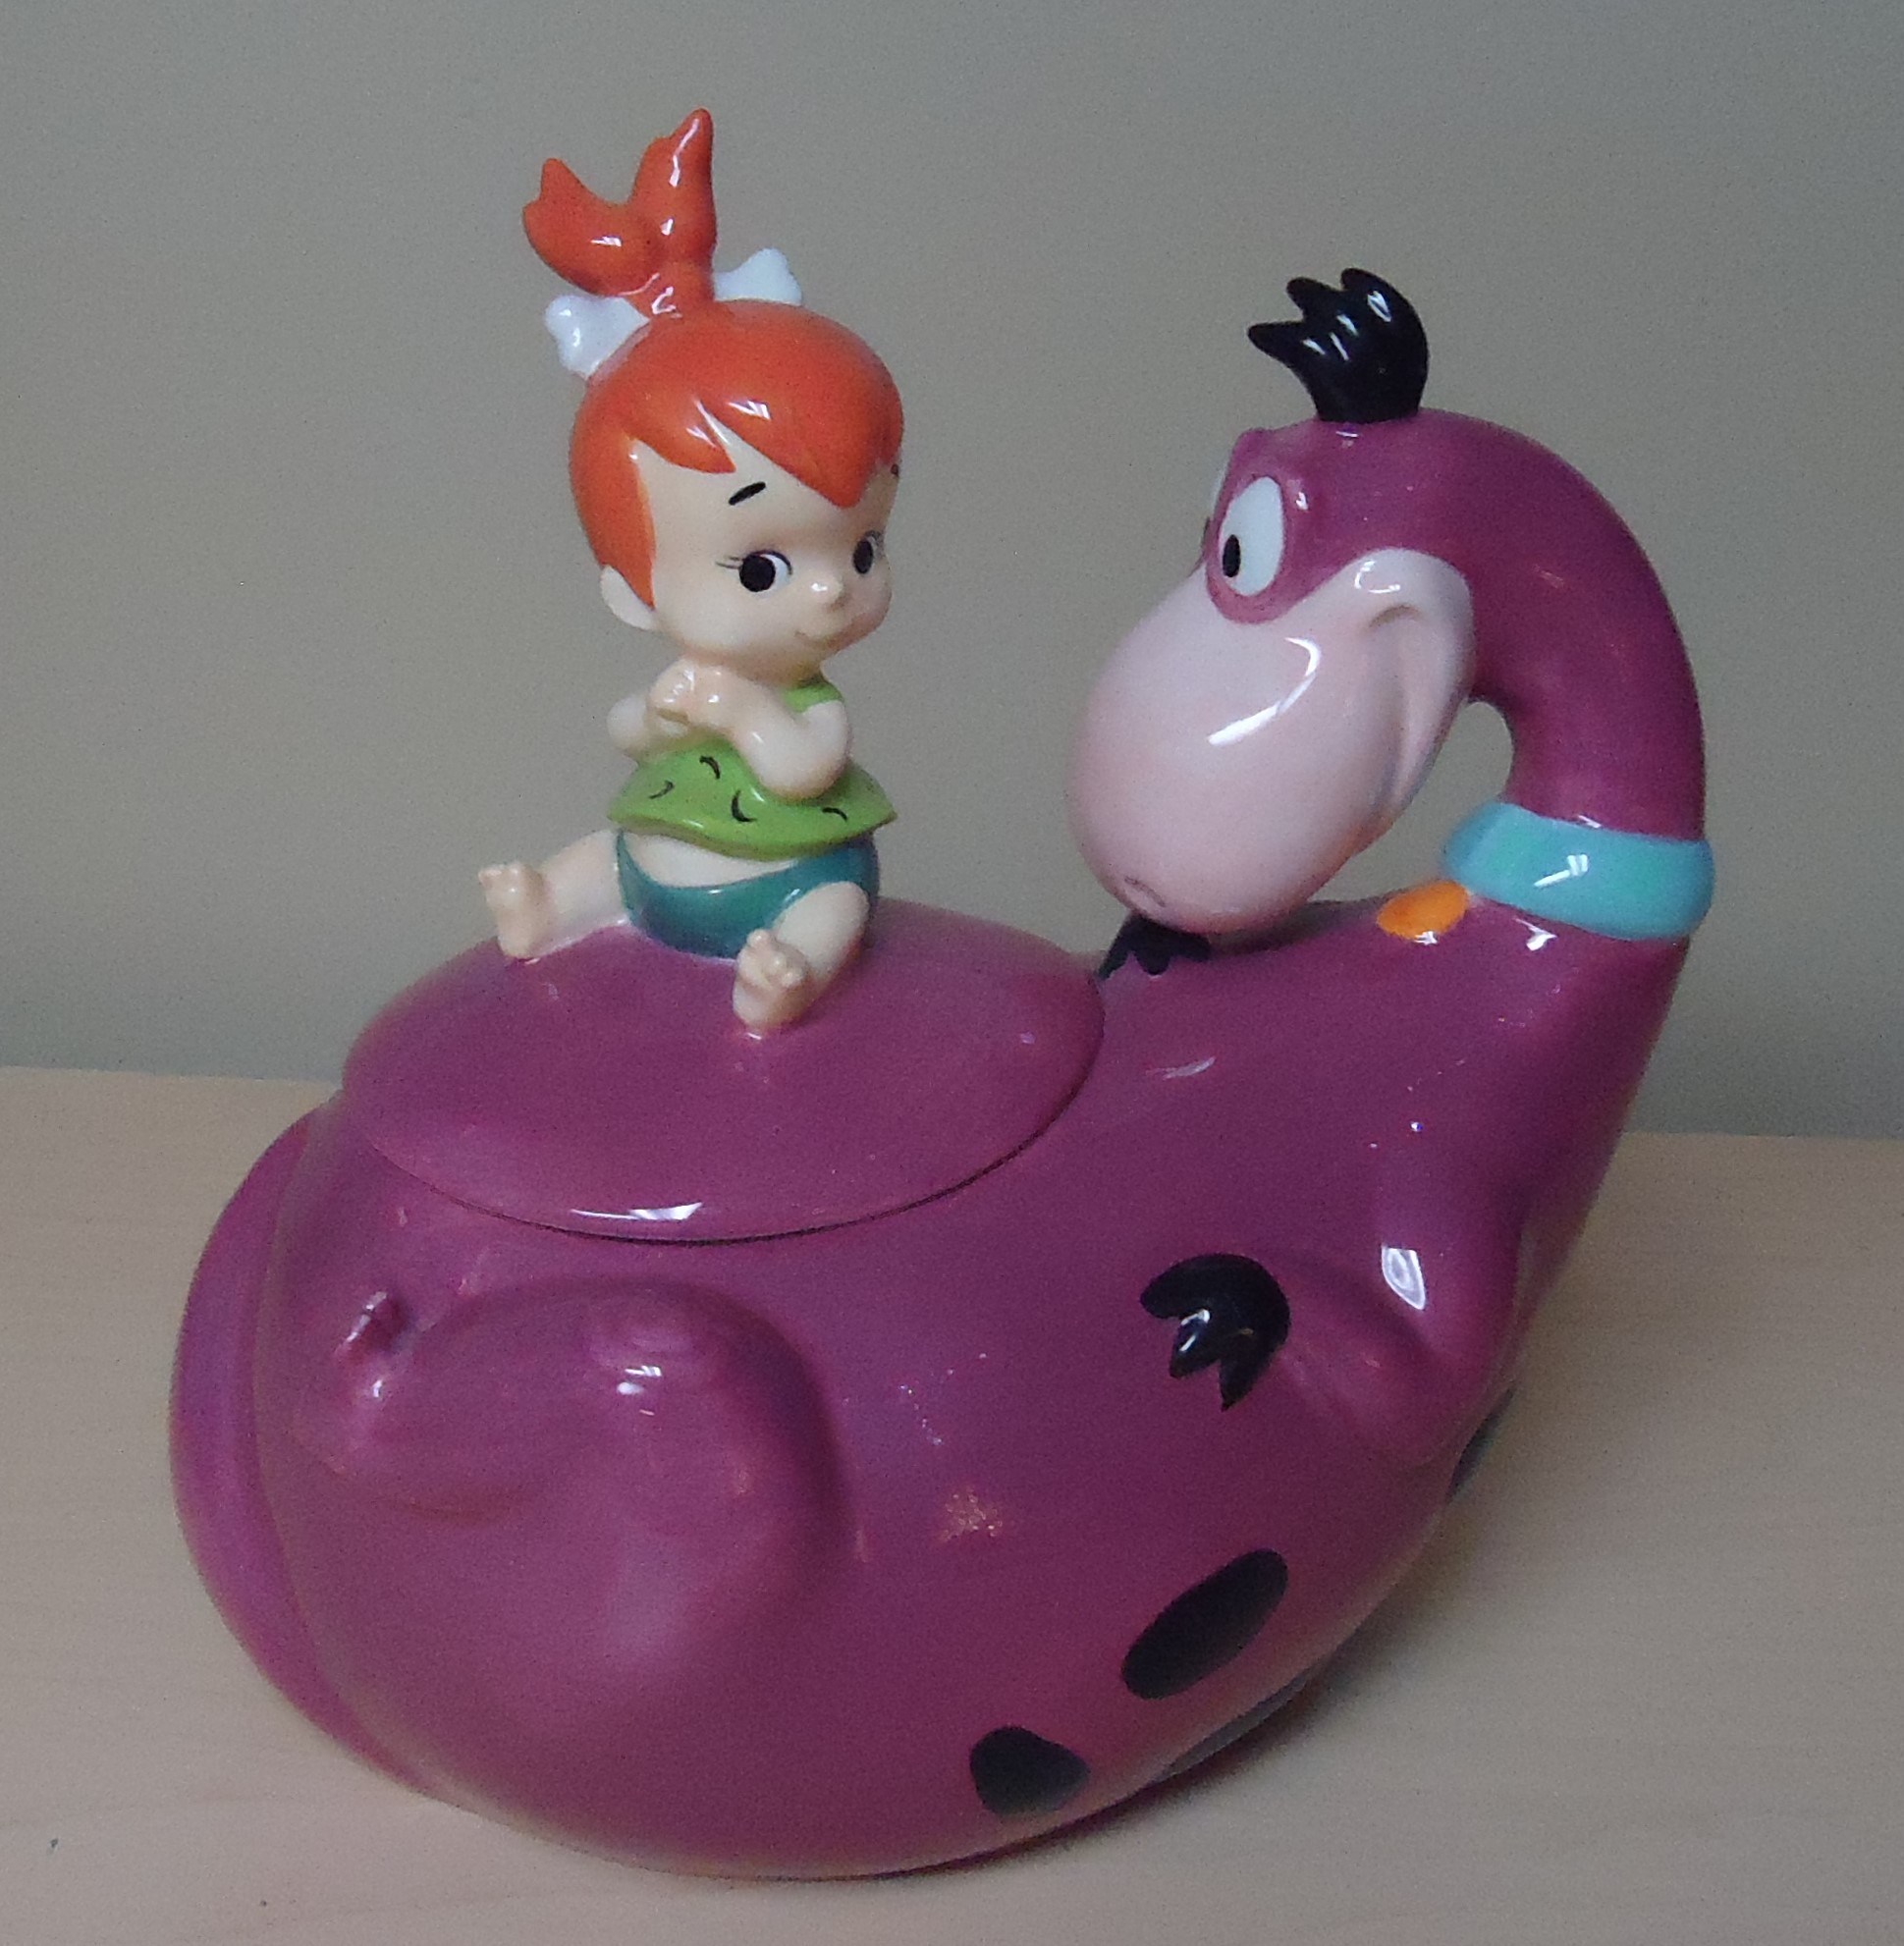 (7) "Flintstones" Dino & Pebbles
Cookie Jar
$55.00